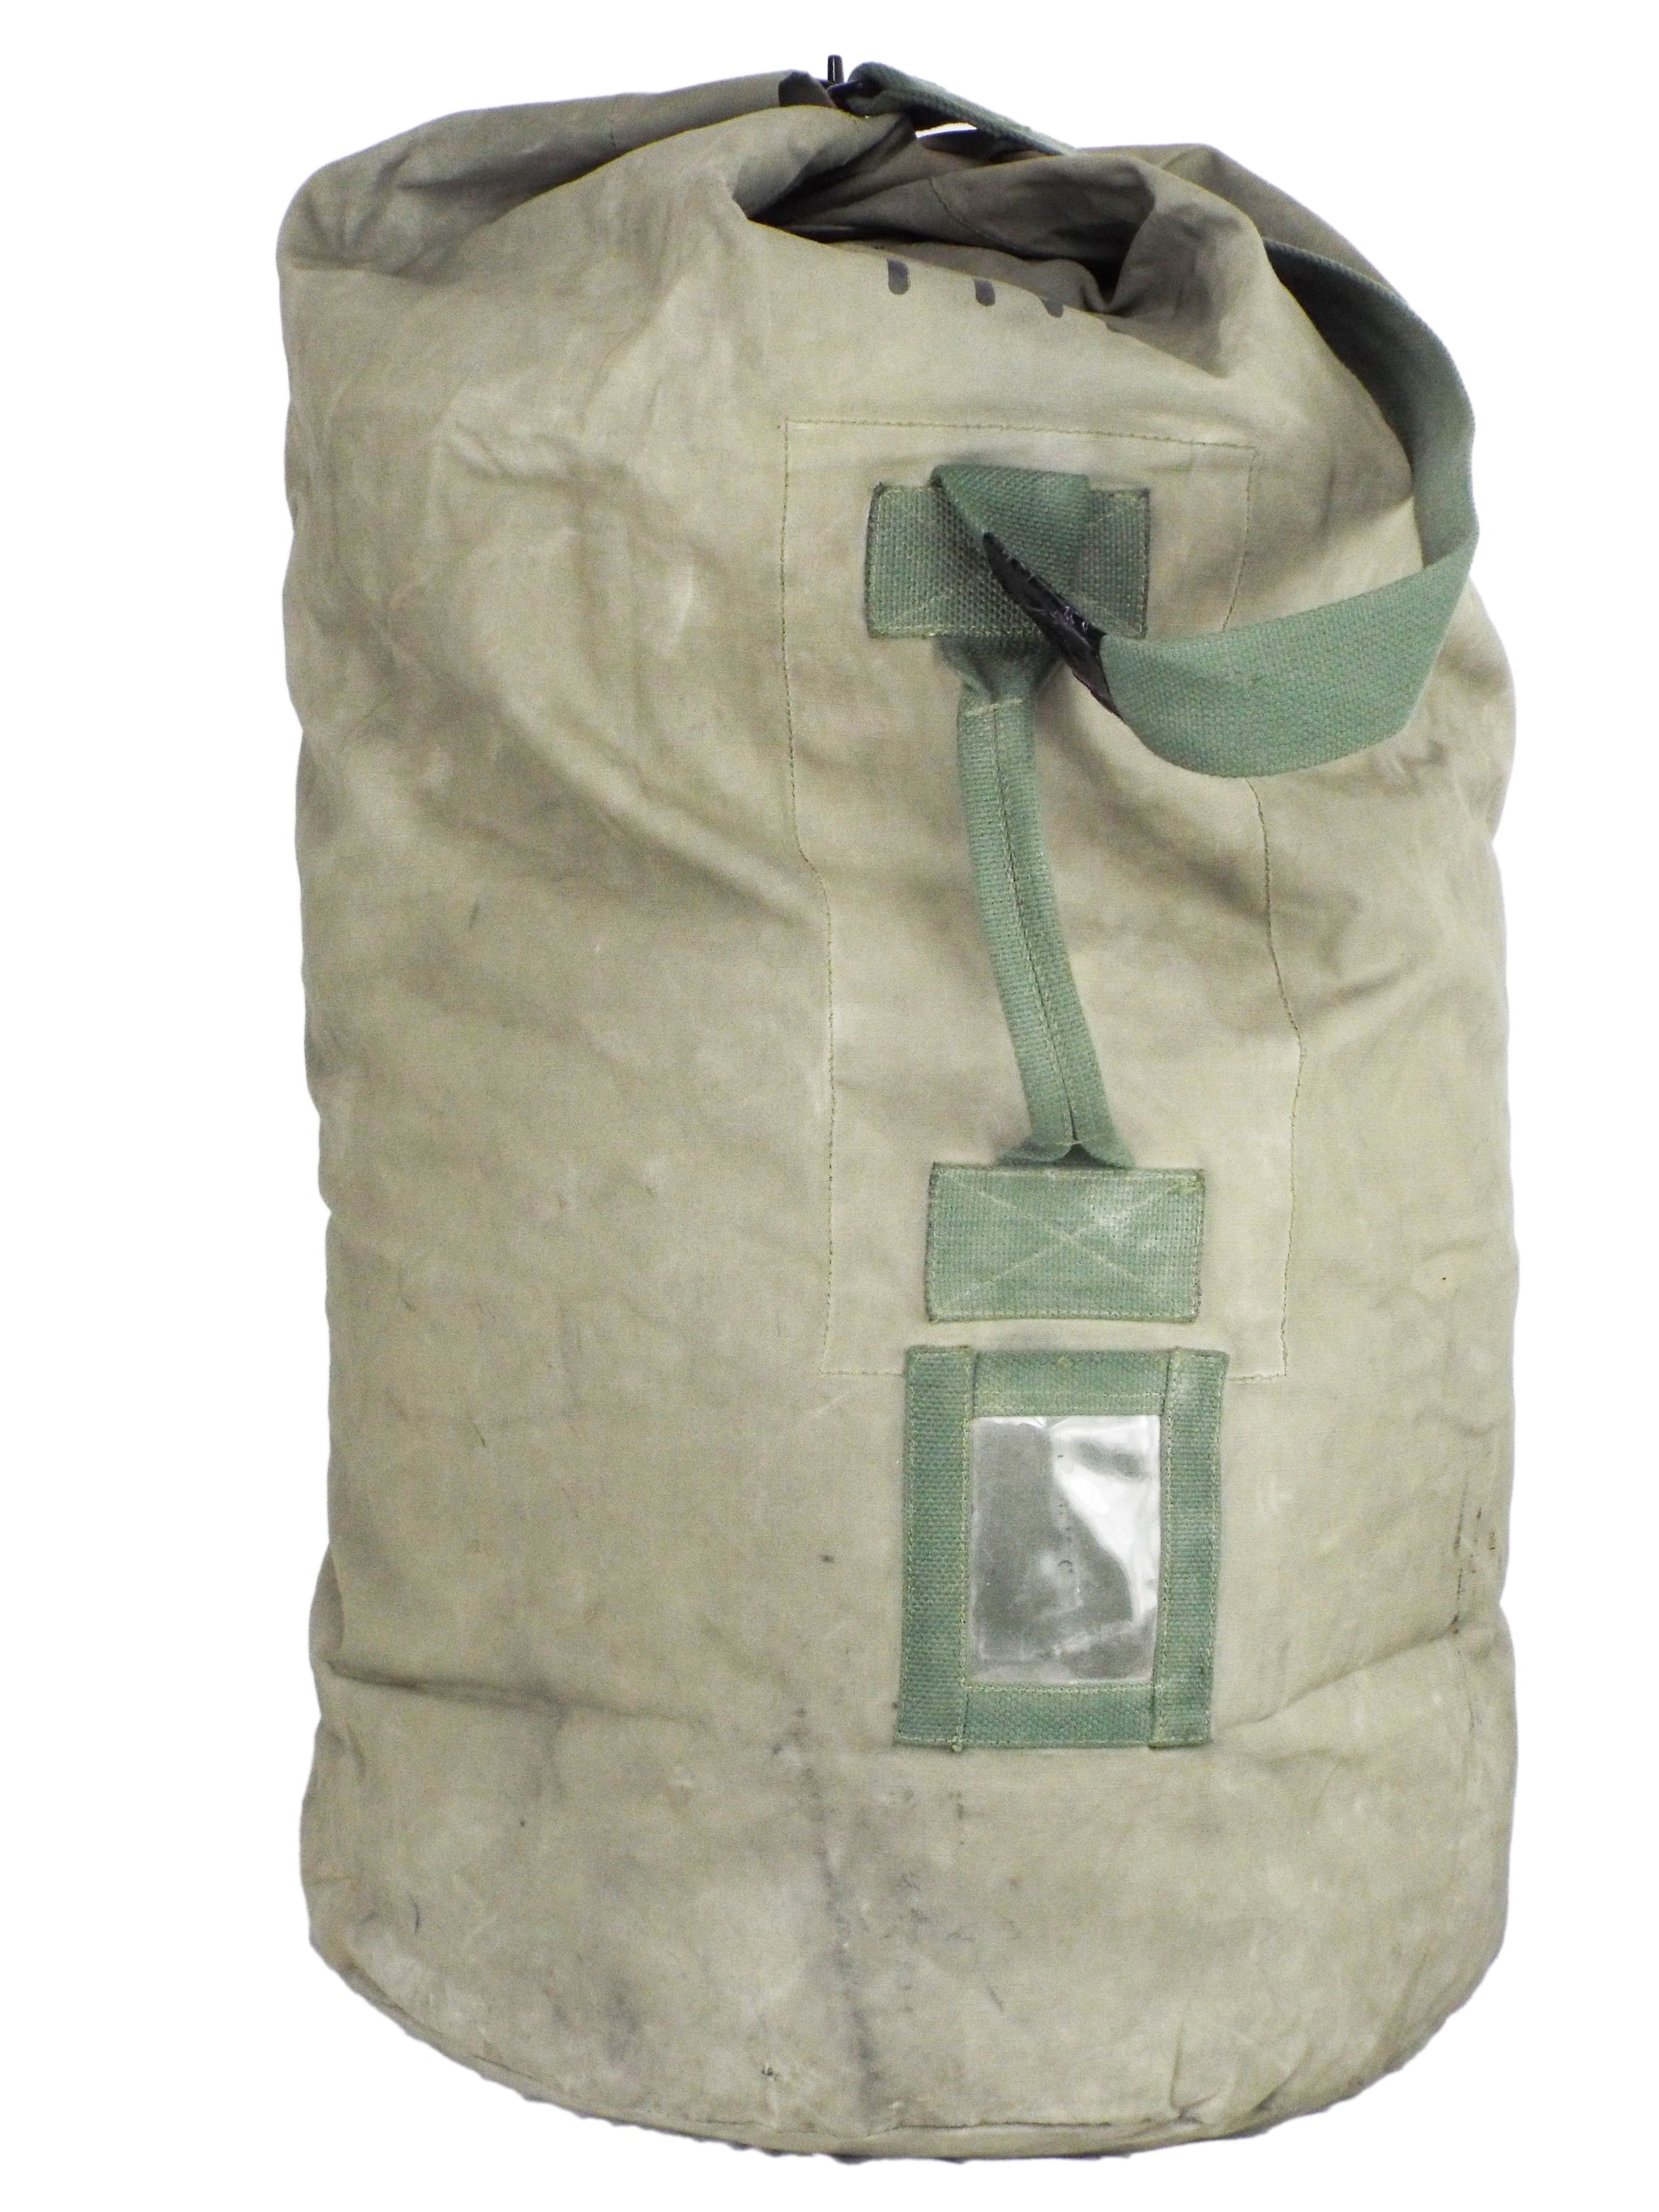 Army Duffle Bag - Military Duffle Bag